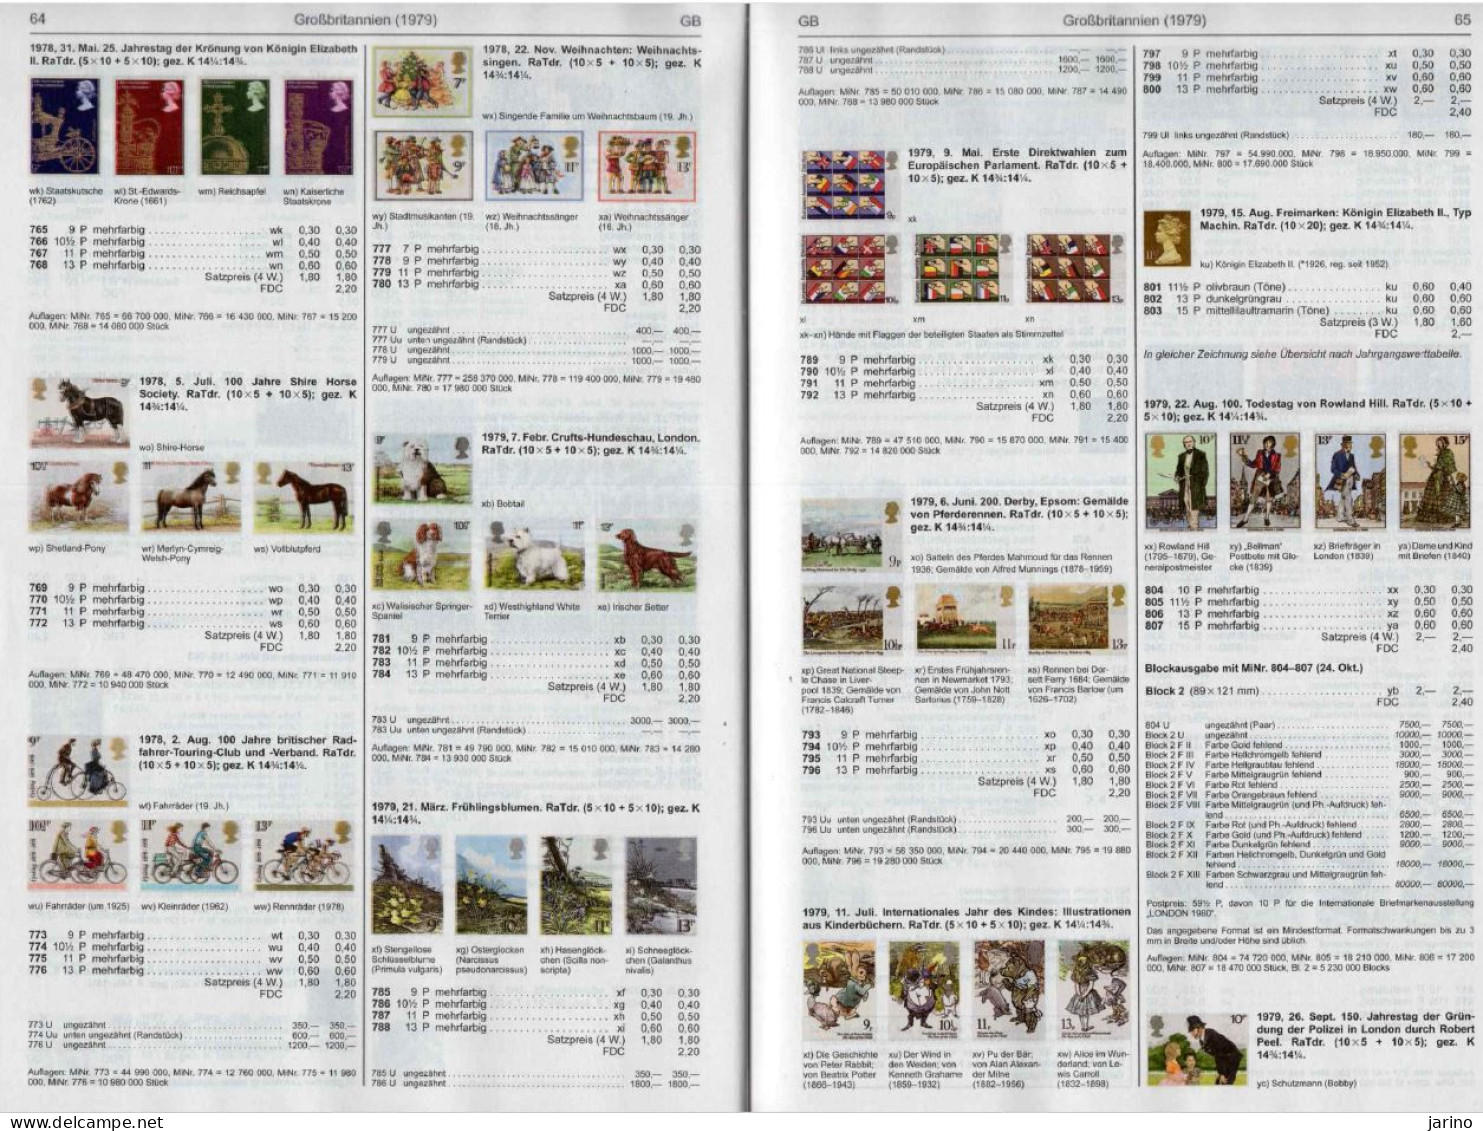 Grossbritannien Michel Catalogue 2022, 570 Pages On CD, UK, Nordirland, Schottland, Wales, Irland - Allemand